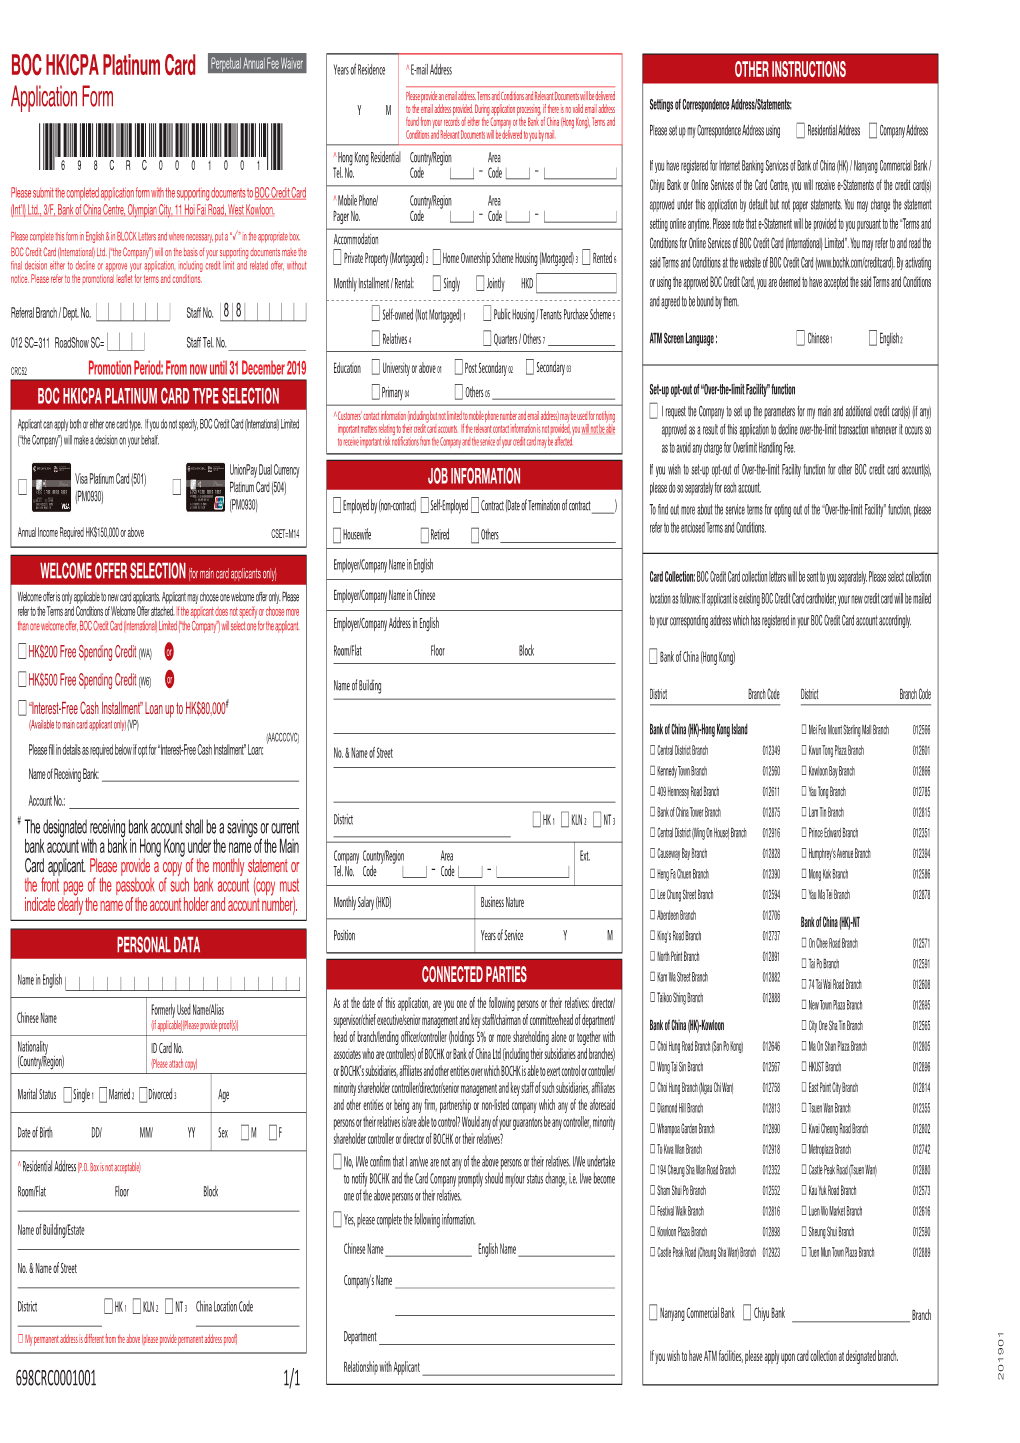 BOC HKICPA Platinum Card Application Form